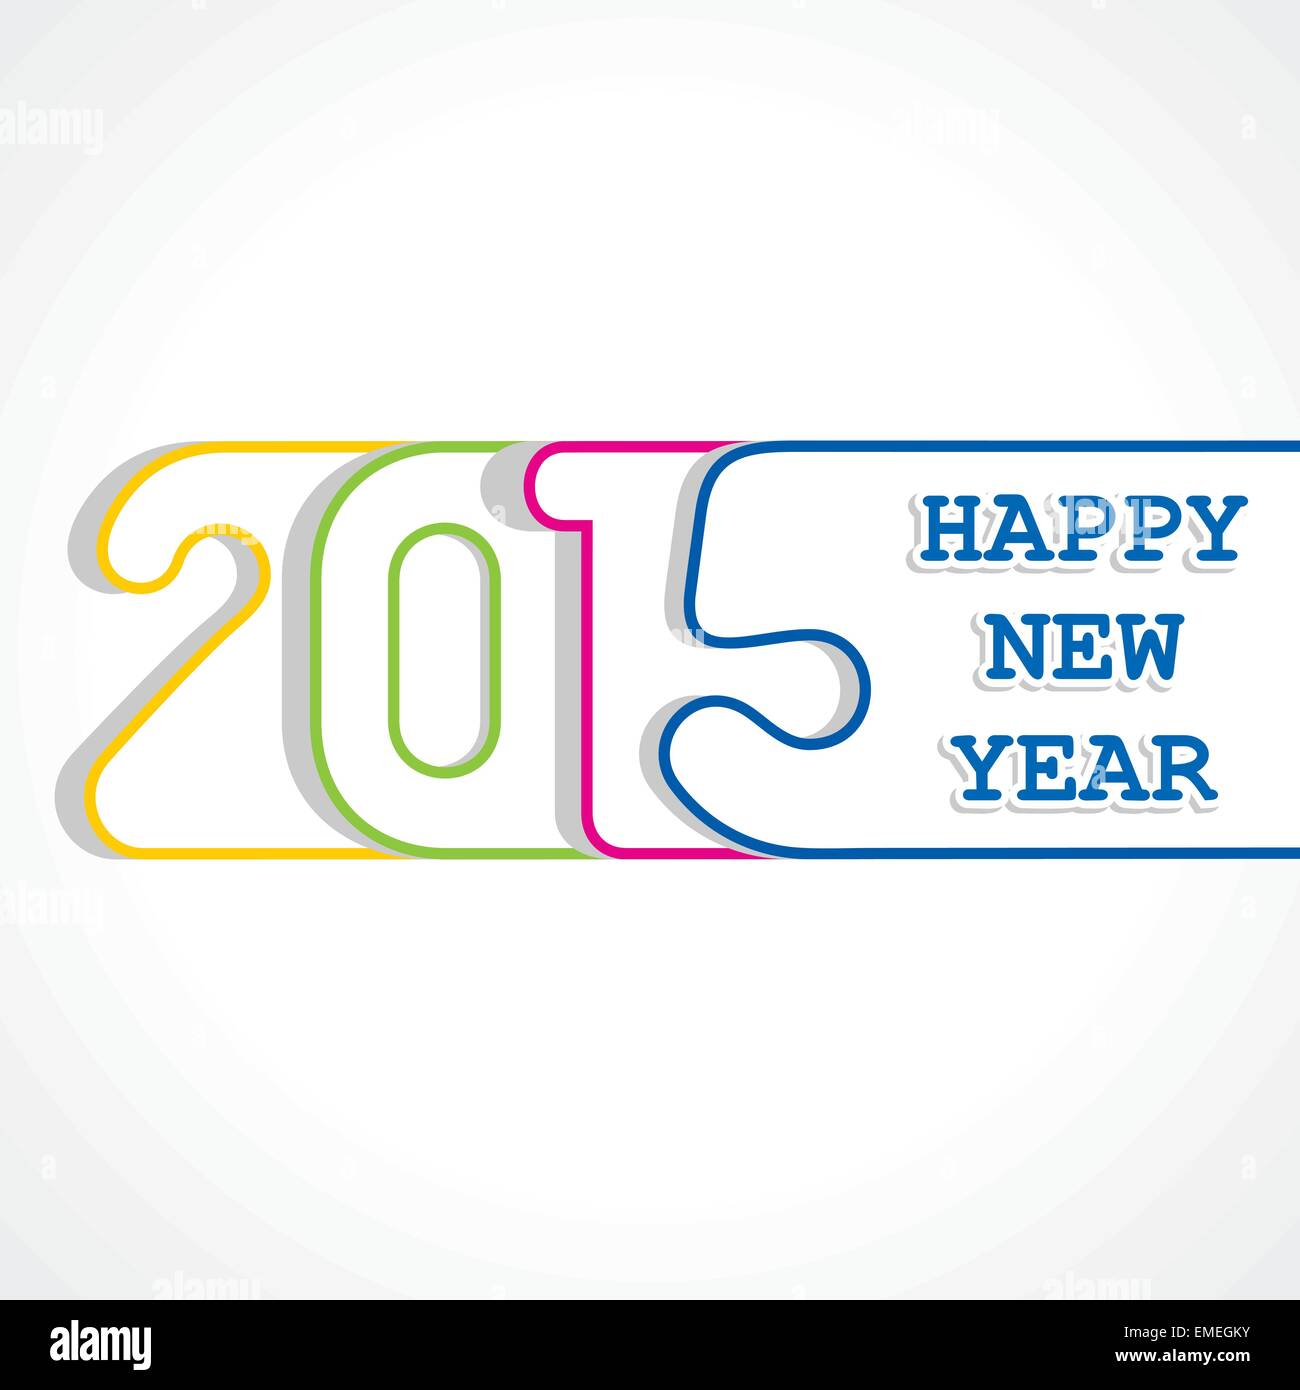 creative happy new year 2015 design stock vector Stock Vector